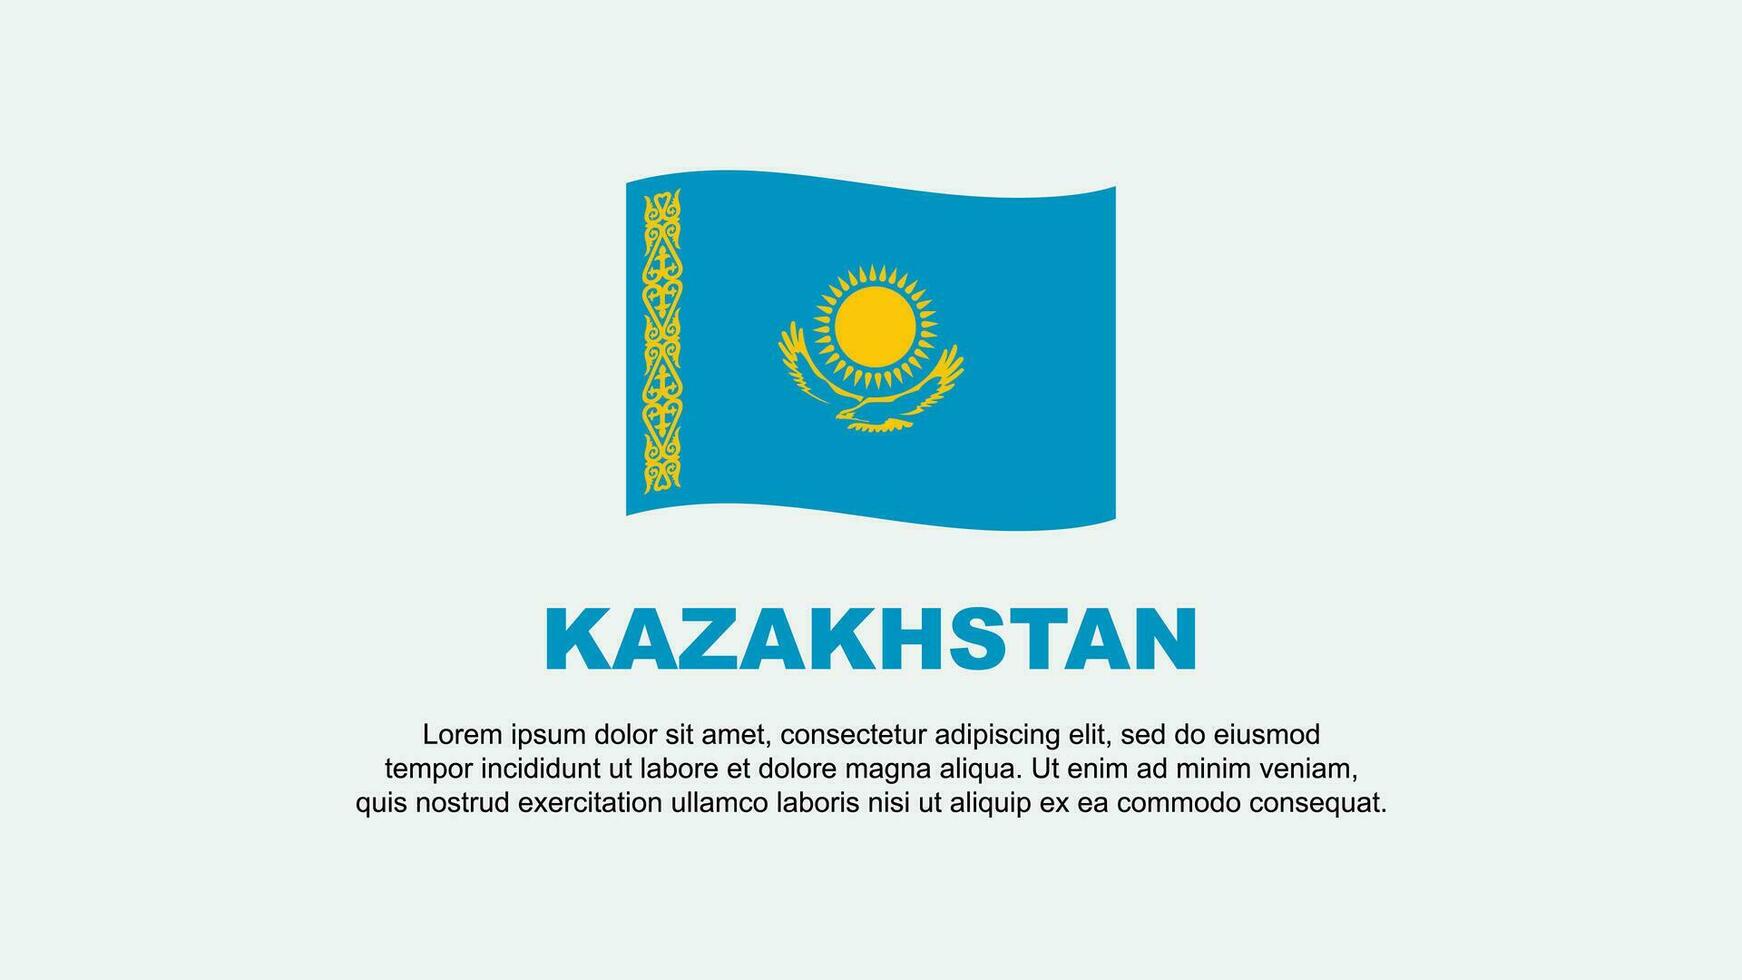 Kazakhstan Flag Abstract Background Design Template. Kazakhstan Independence Day Banner Social Media Vector Illustration. Kazakhstan Background